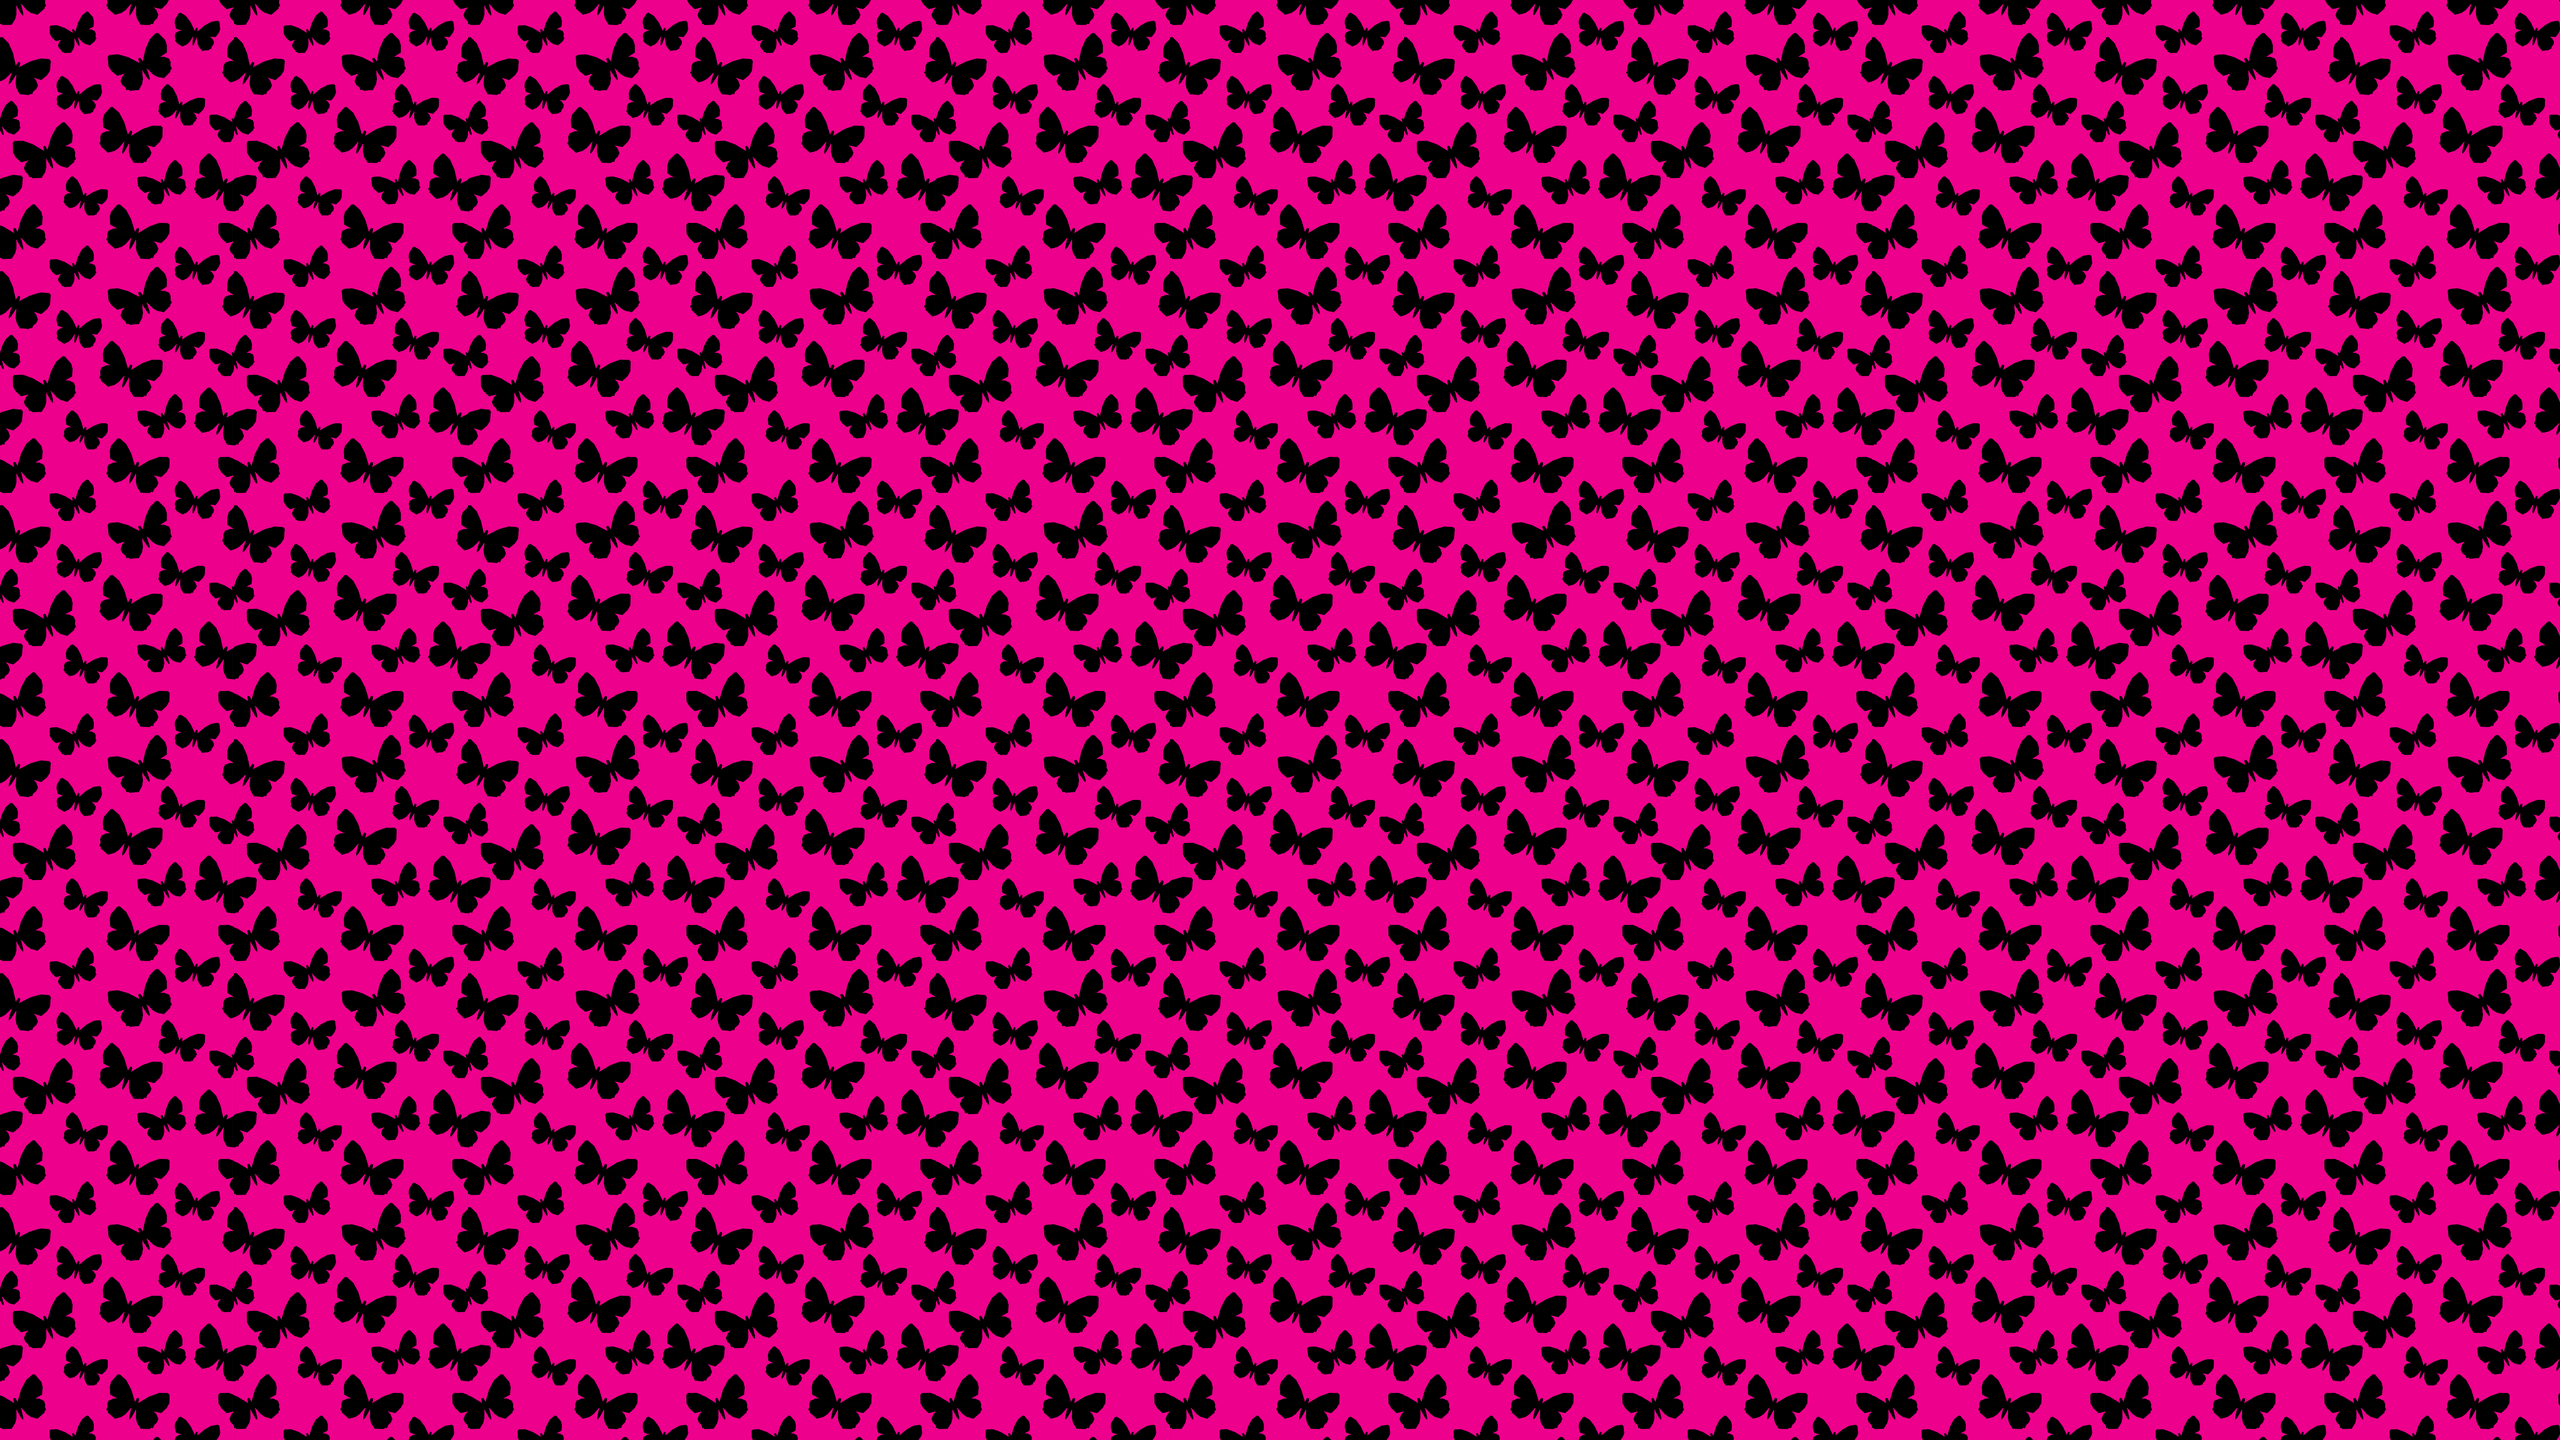 Installing This Hot Pink Butterflies Desktop Wallpaper Is Easy Just